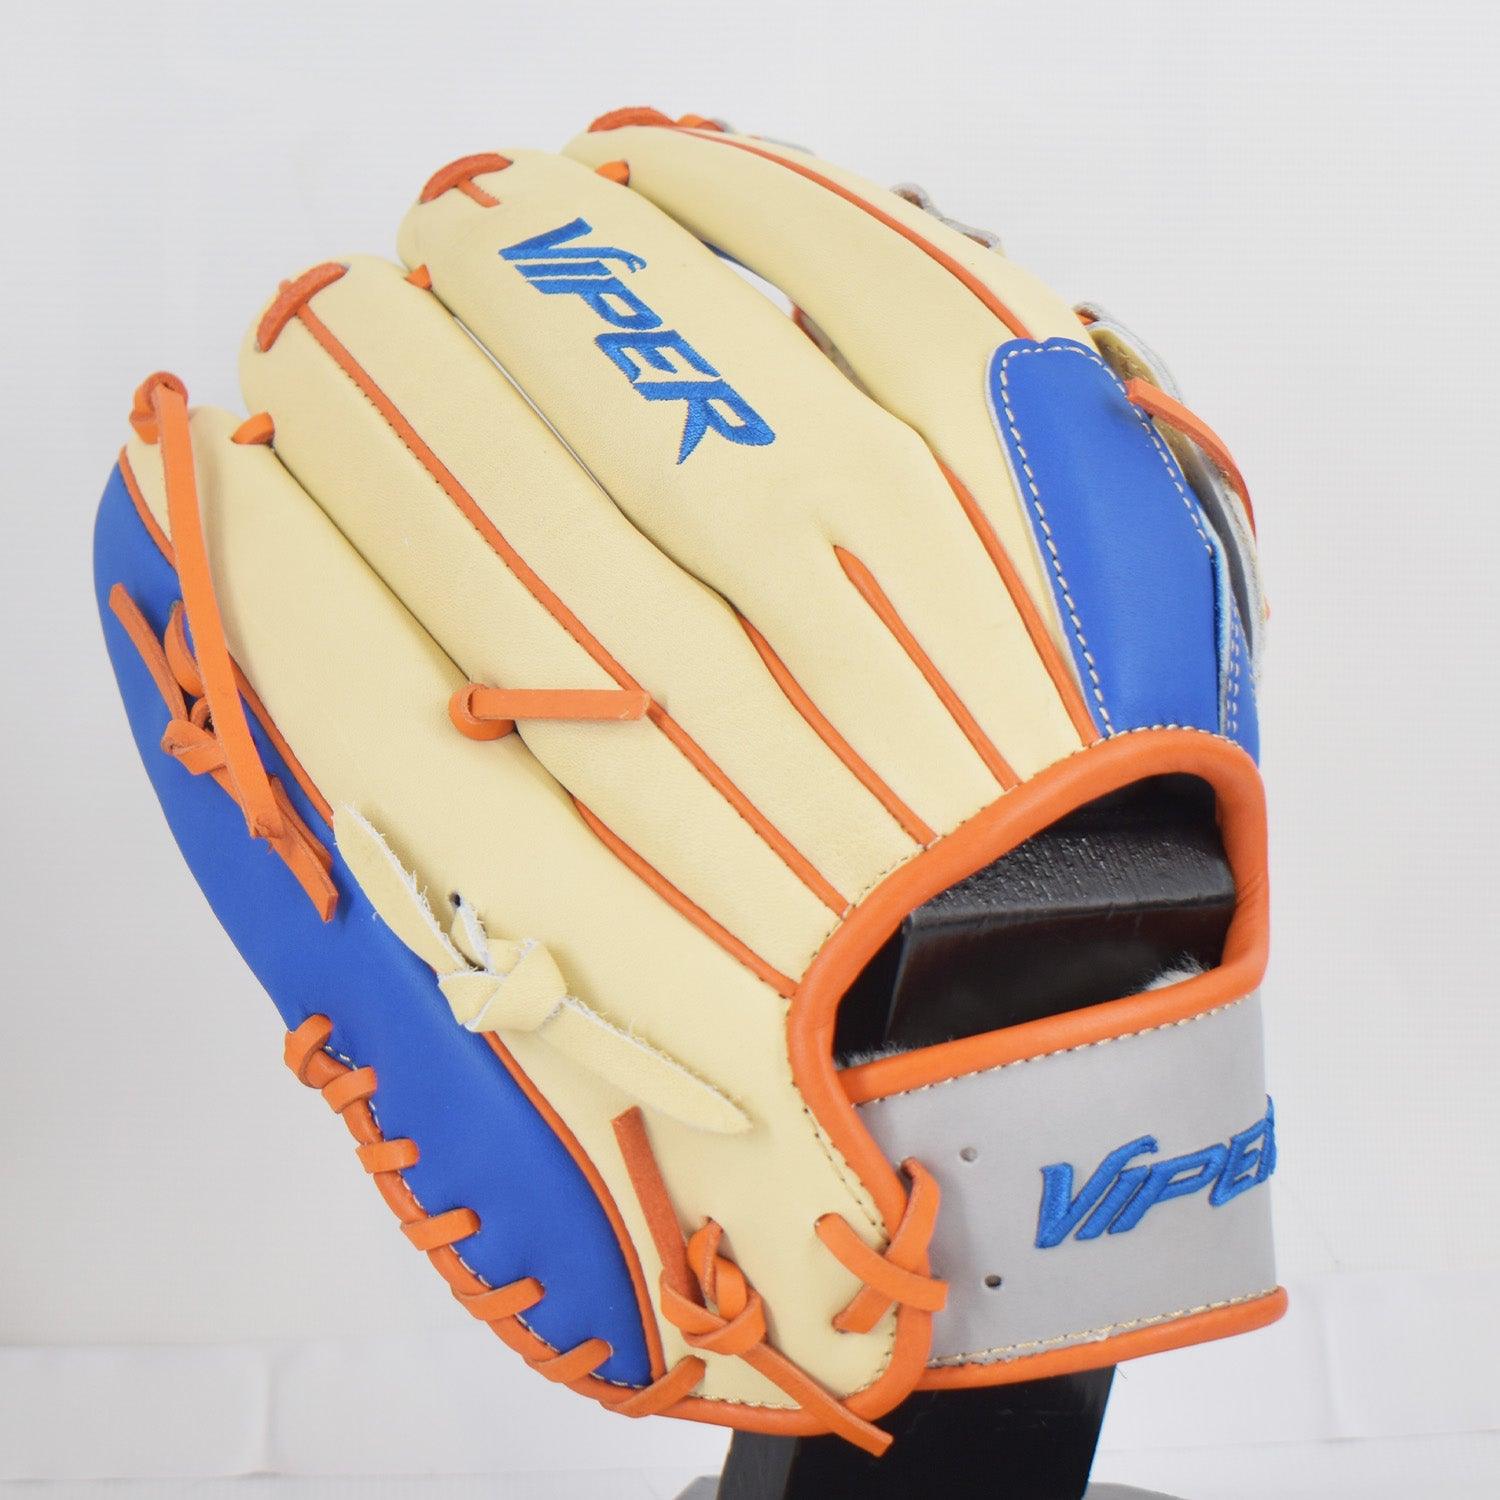 Viper Japanese Kip Leather Slowpitch Softball Fielding Glove Royal/Tan/Orange/Grey - Smash It Sports